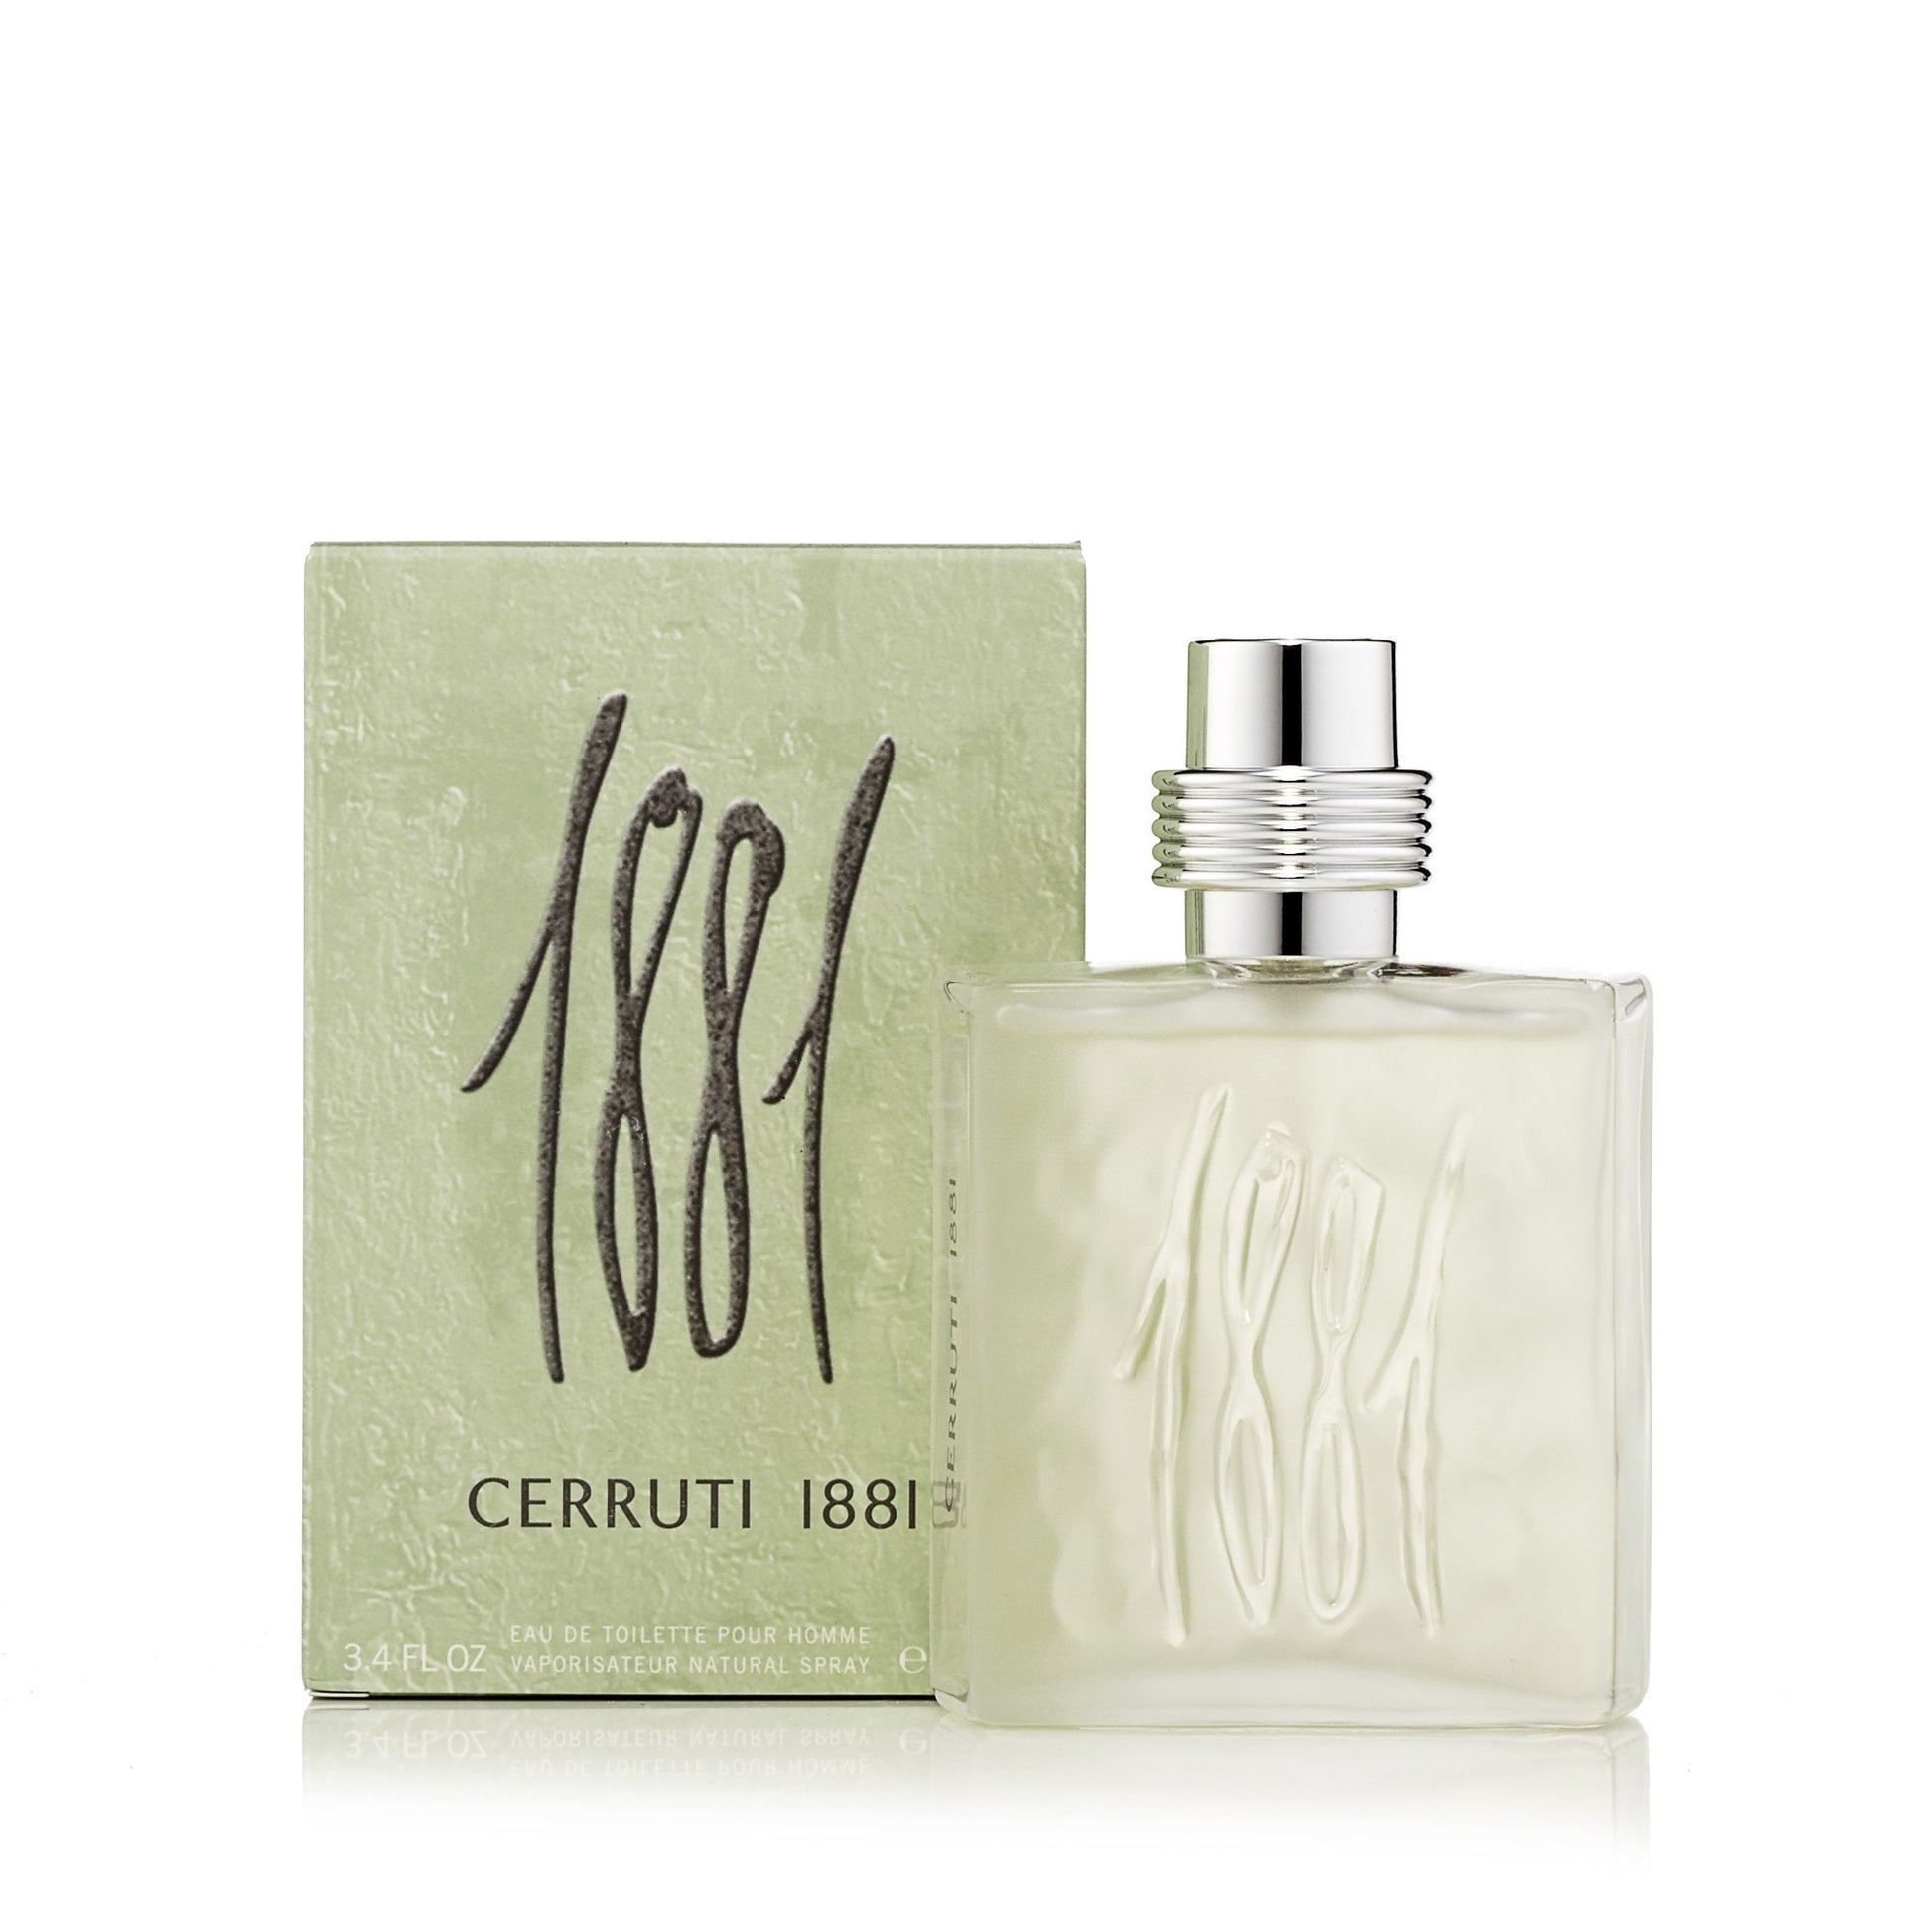 Cerruti 1881 Eau de Toilette Spray for Men by Nino Cerruti 3.4 oz. Click to open in modal